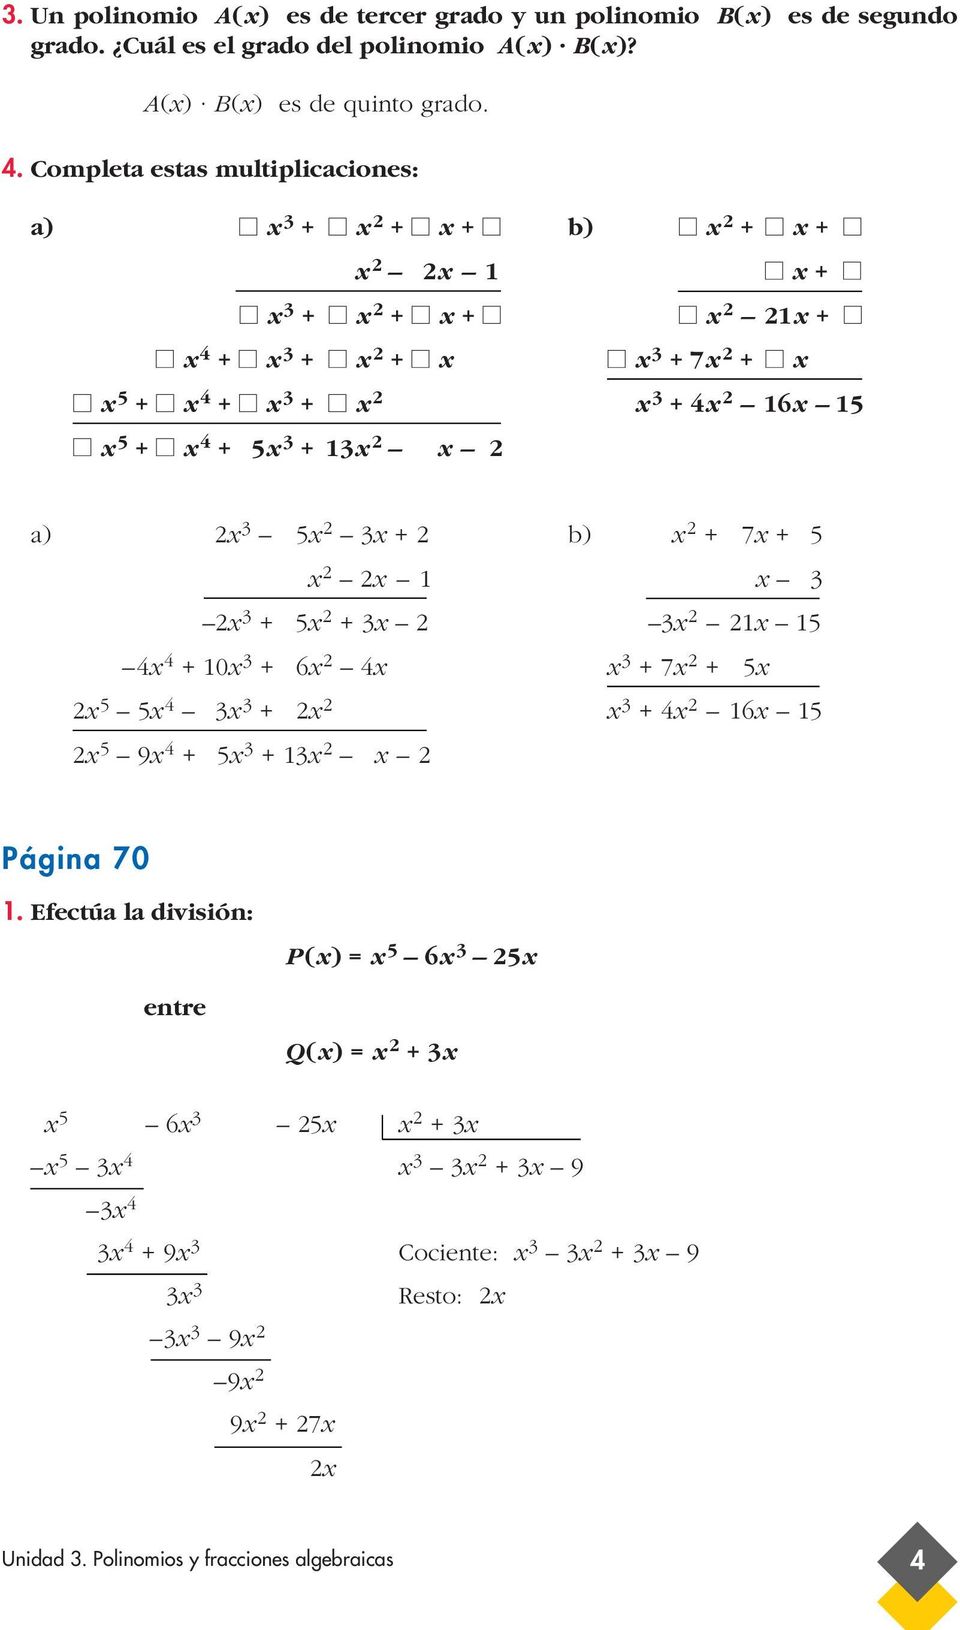 Completa estas multiplicaciones: a) + + + b) + + + + + 4 + + + + + + 7 + 5 + 4 + + + 4 6 5 5 + 4 + 5 + a) 5 + b) + 7 + 5